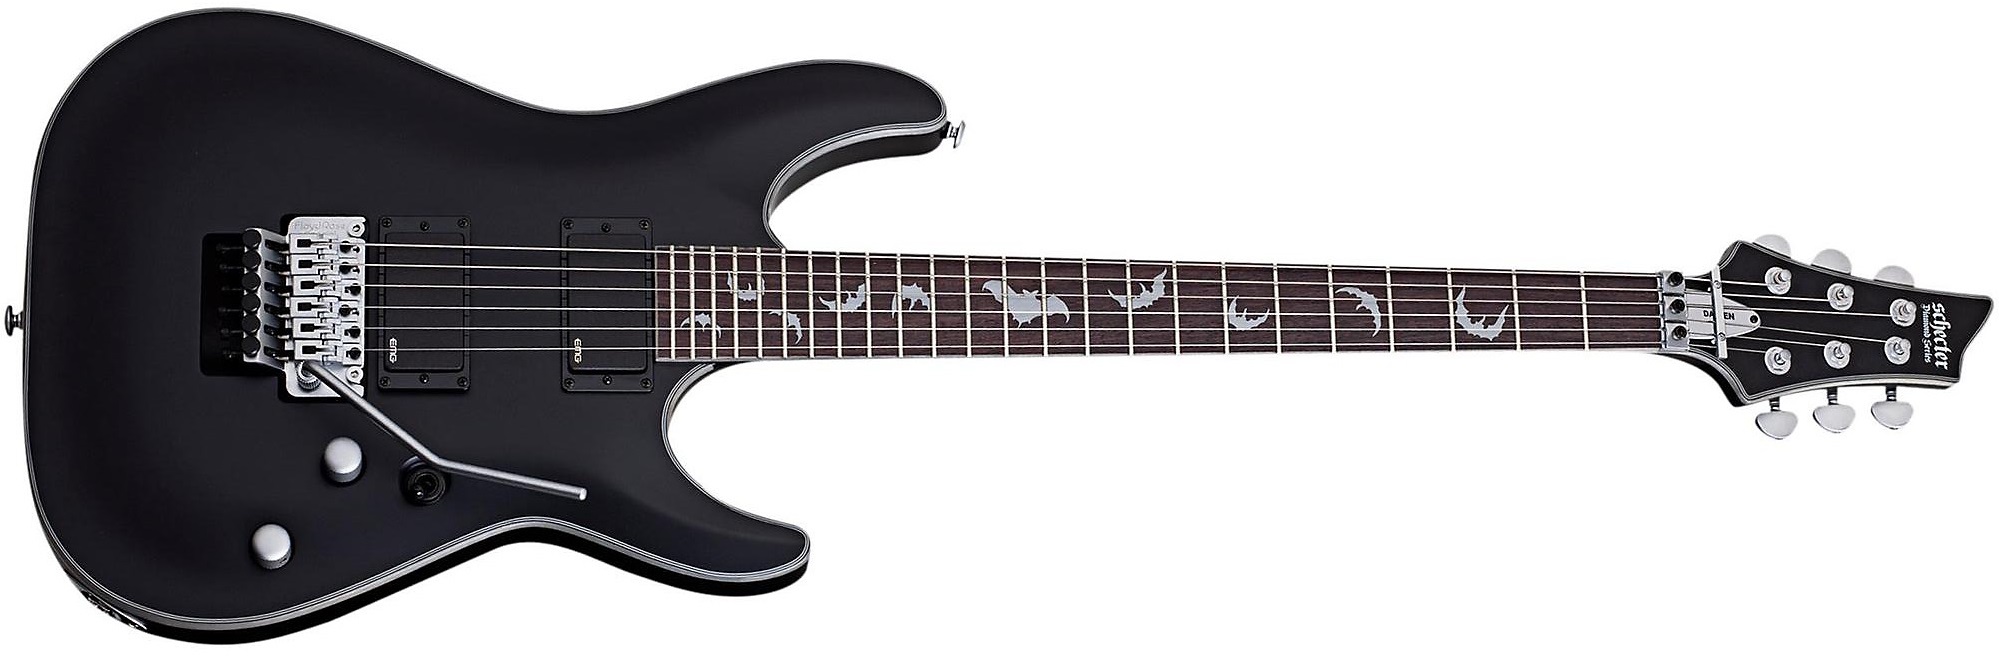 Schecter Damien Platinum 6 FR Electric Guitar on a white background